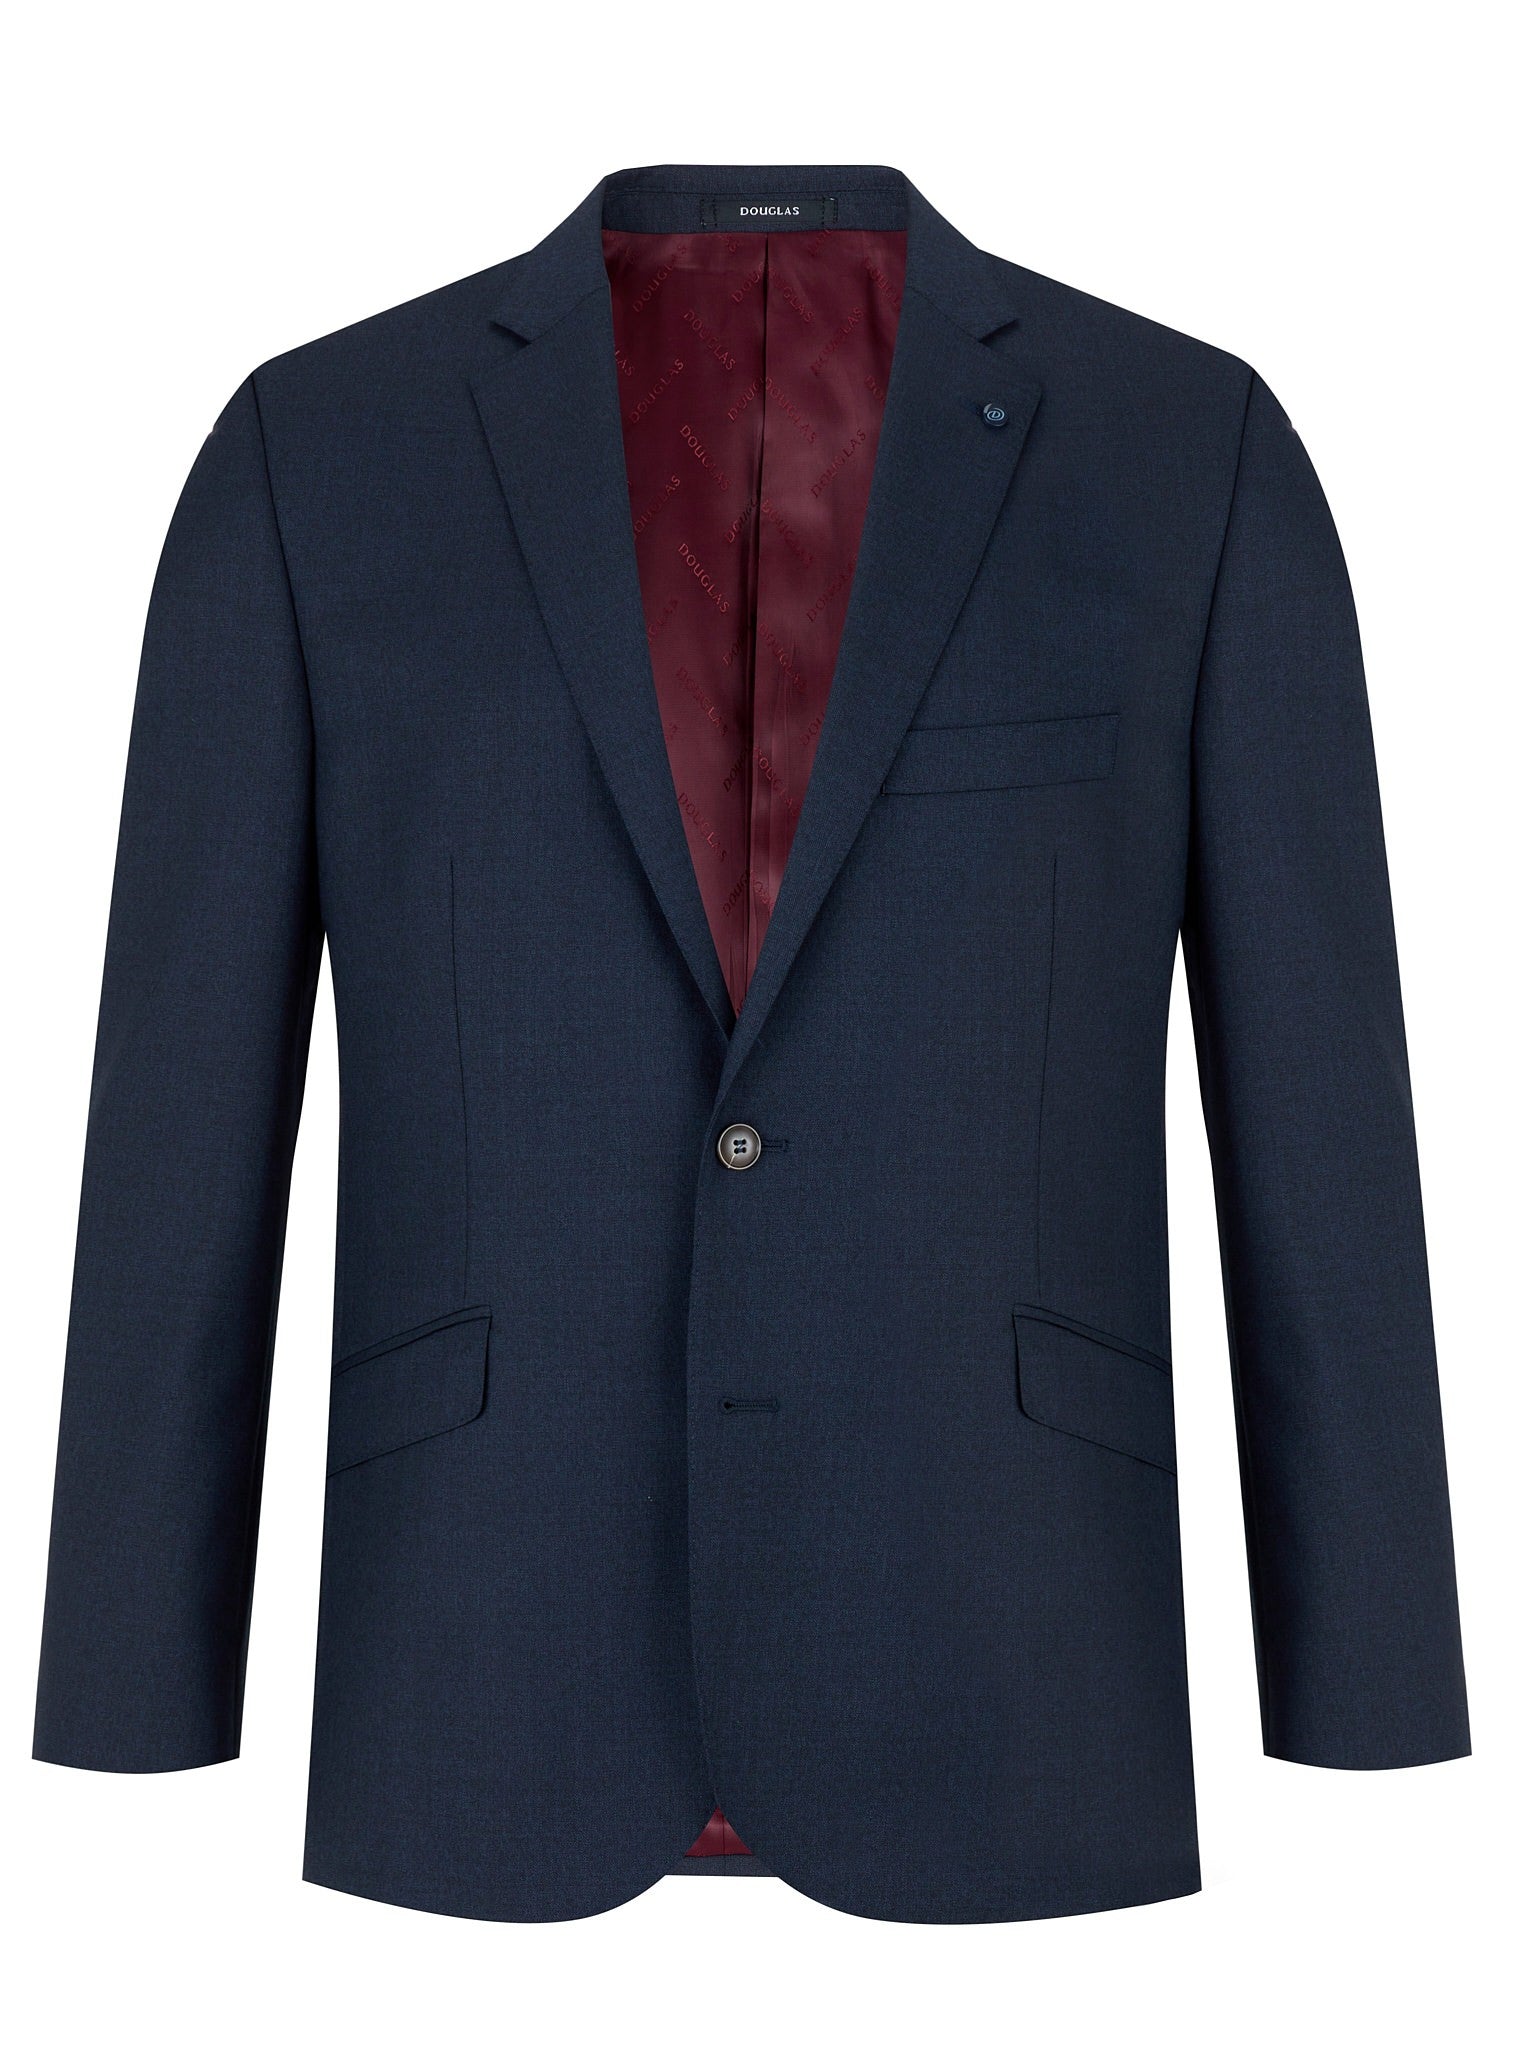 Douglas Valdino Dark Blue Mix & Match Suit Jacket Regular Length